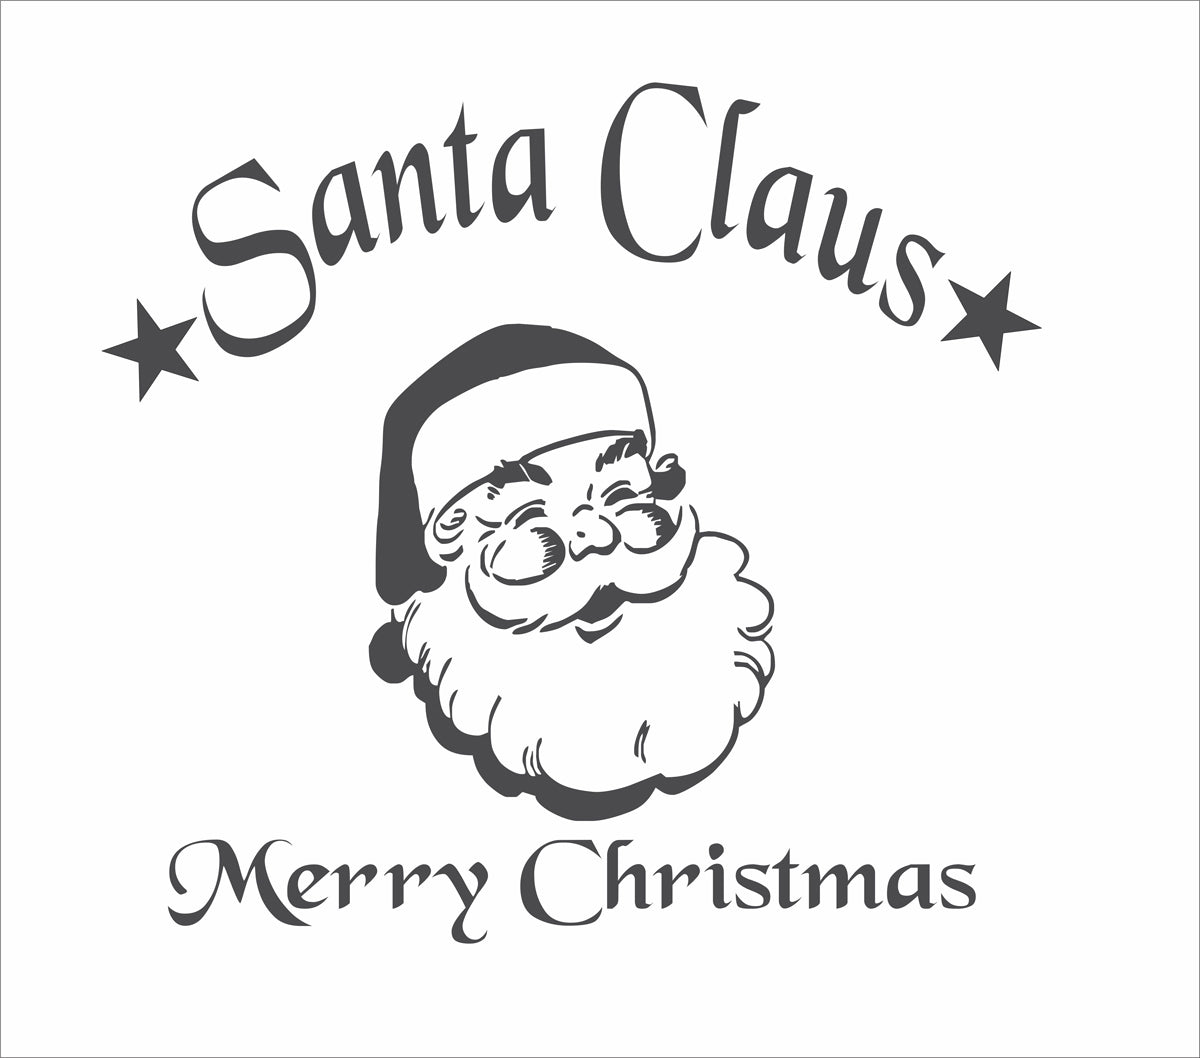 Merry Christmas Stencil - Santa Claus Stencil - Create Christmas Signs